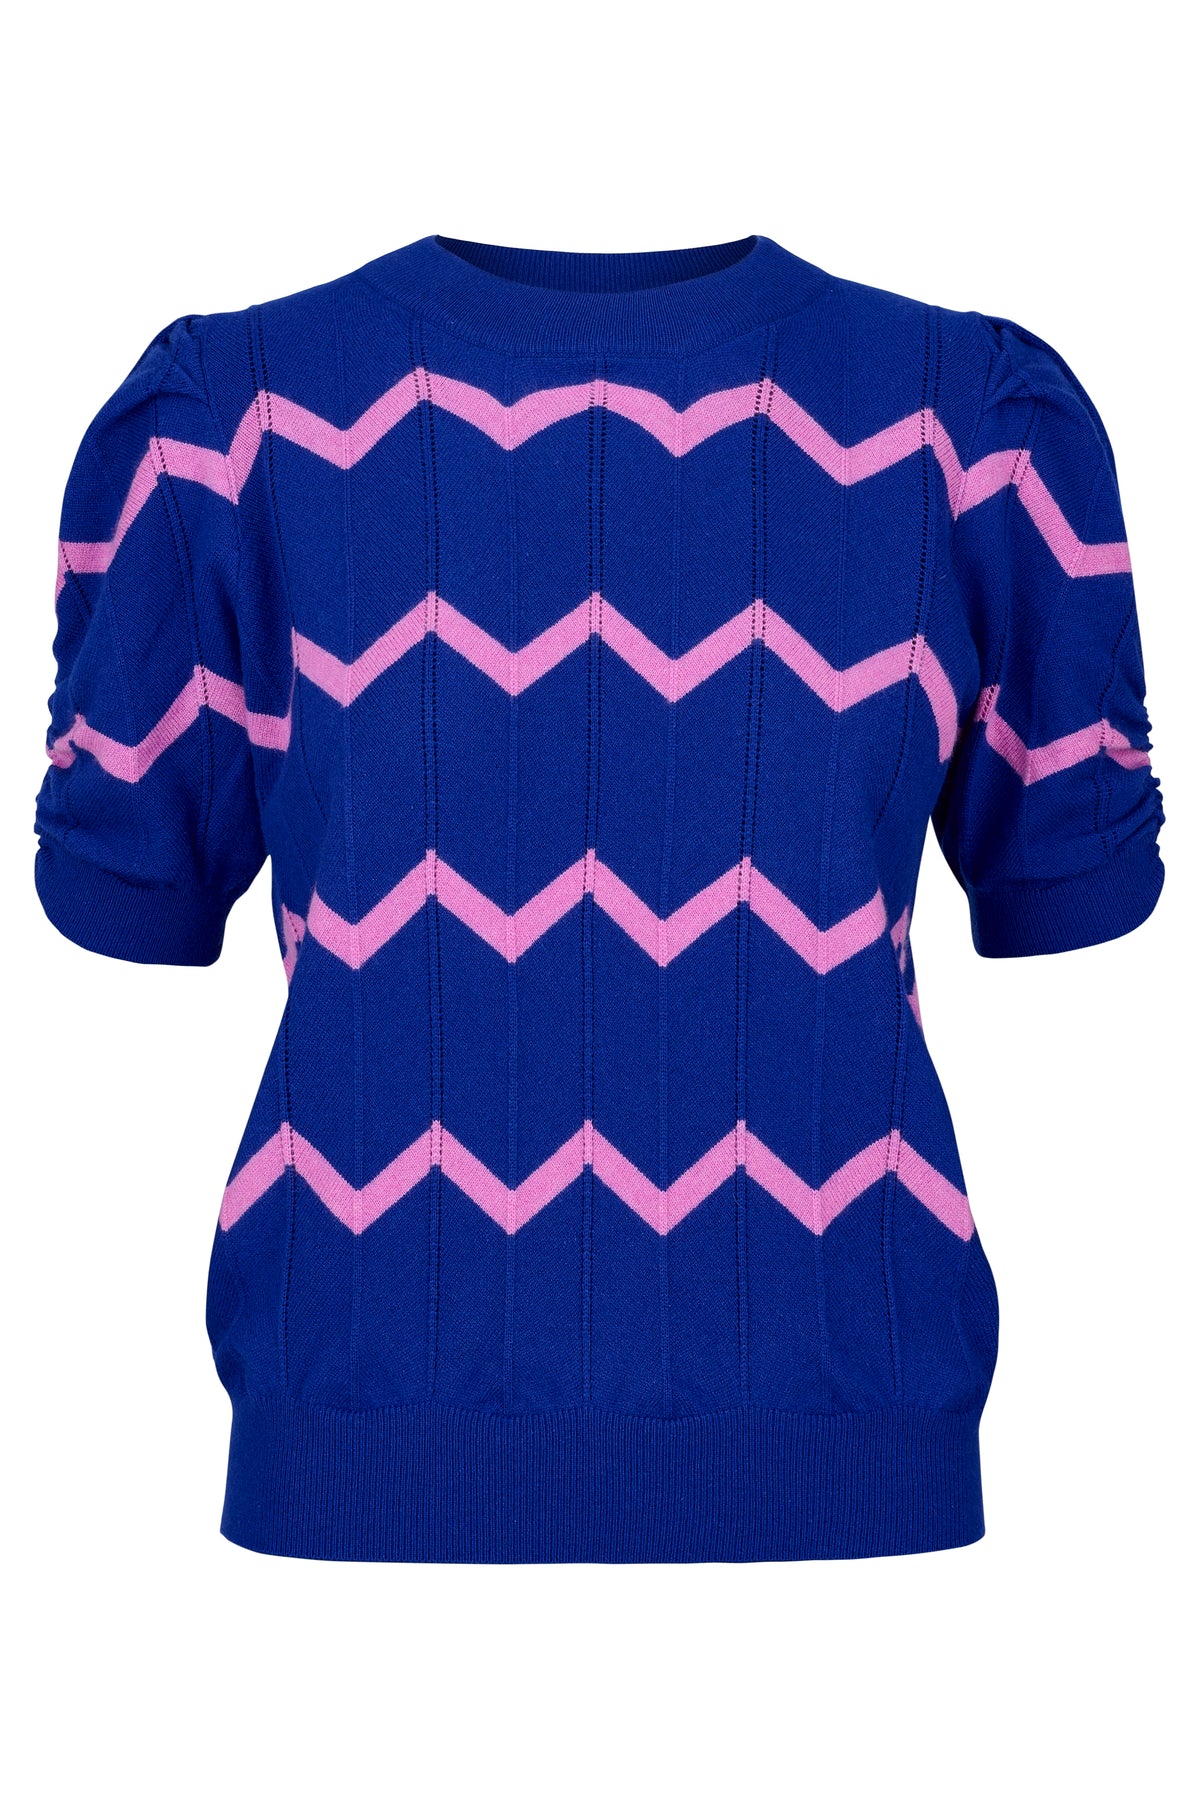 Ruffle Sleeve Blue and Pink Chevron Knit